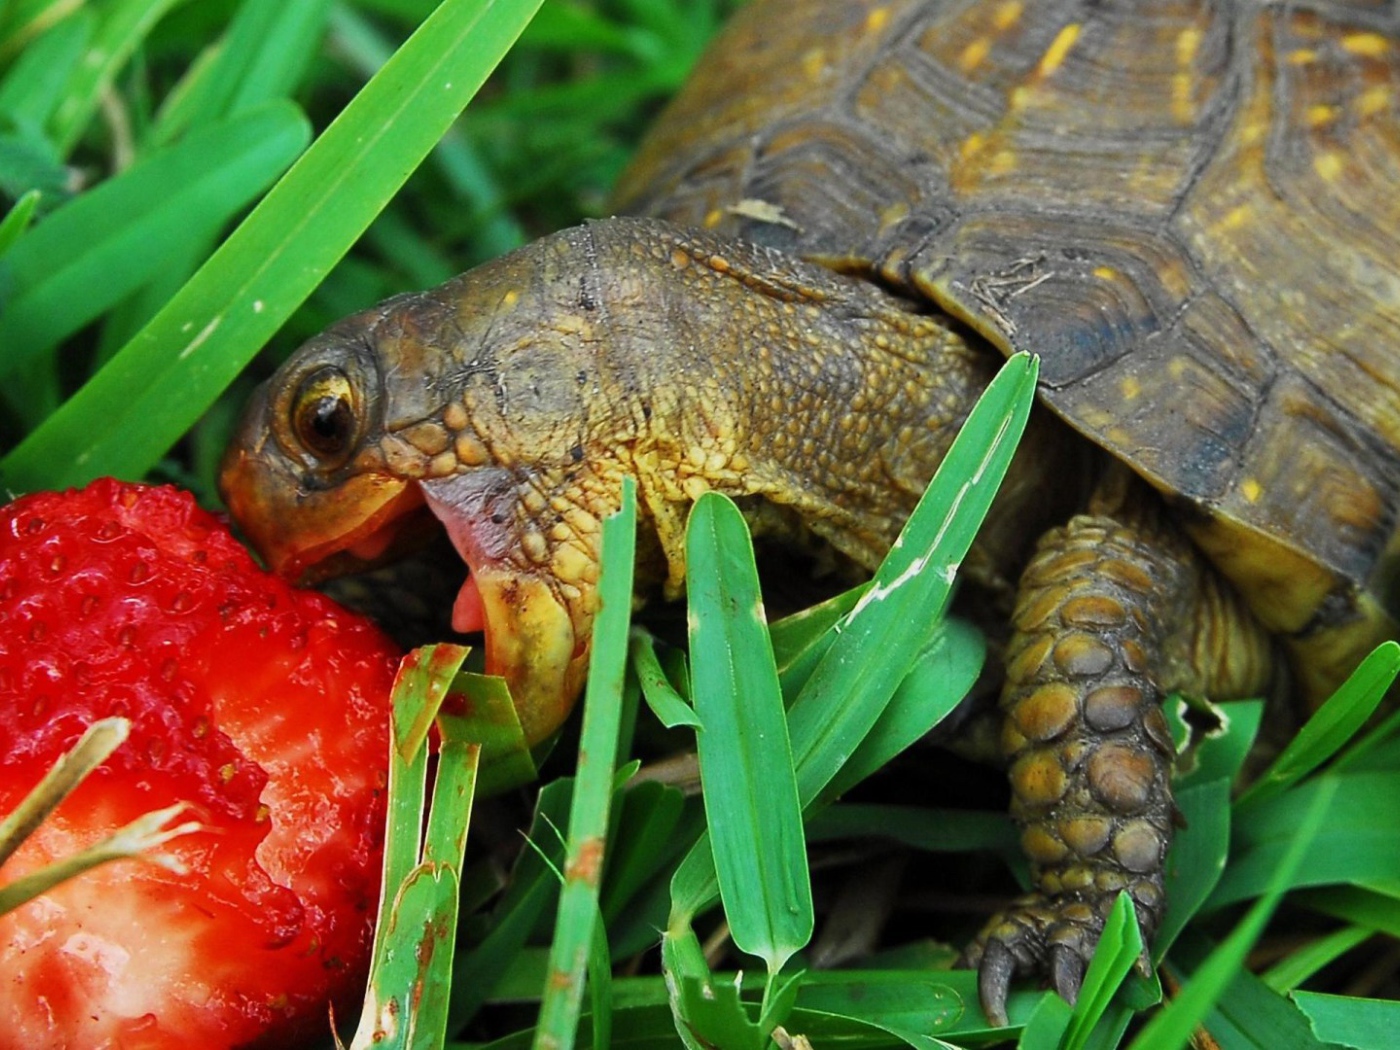 Tortoise eating strawberries